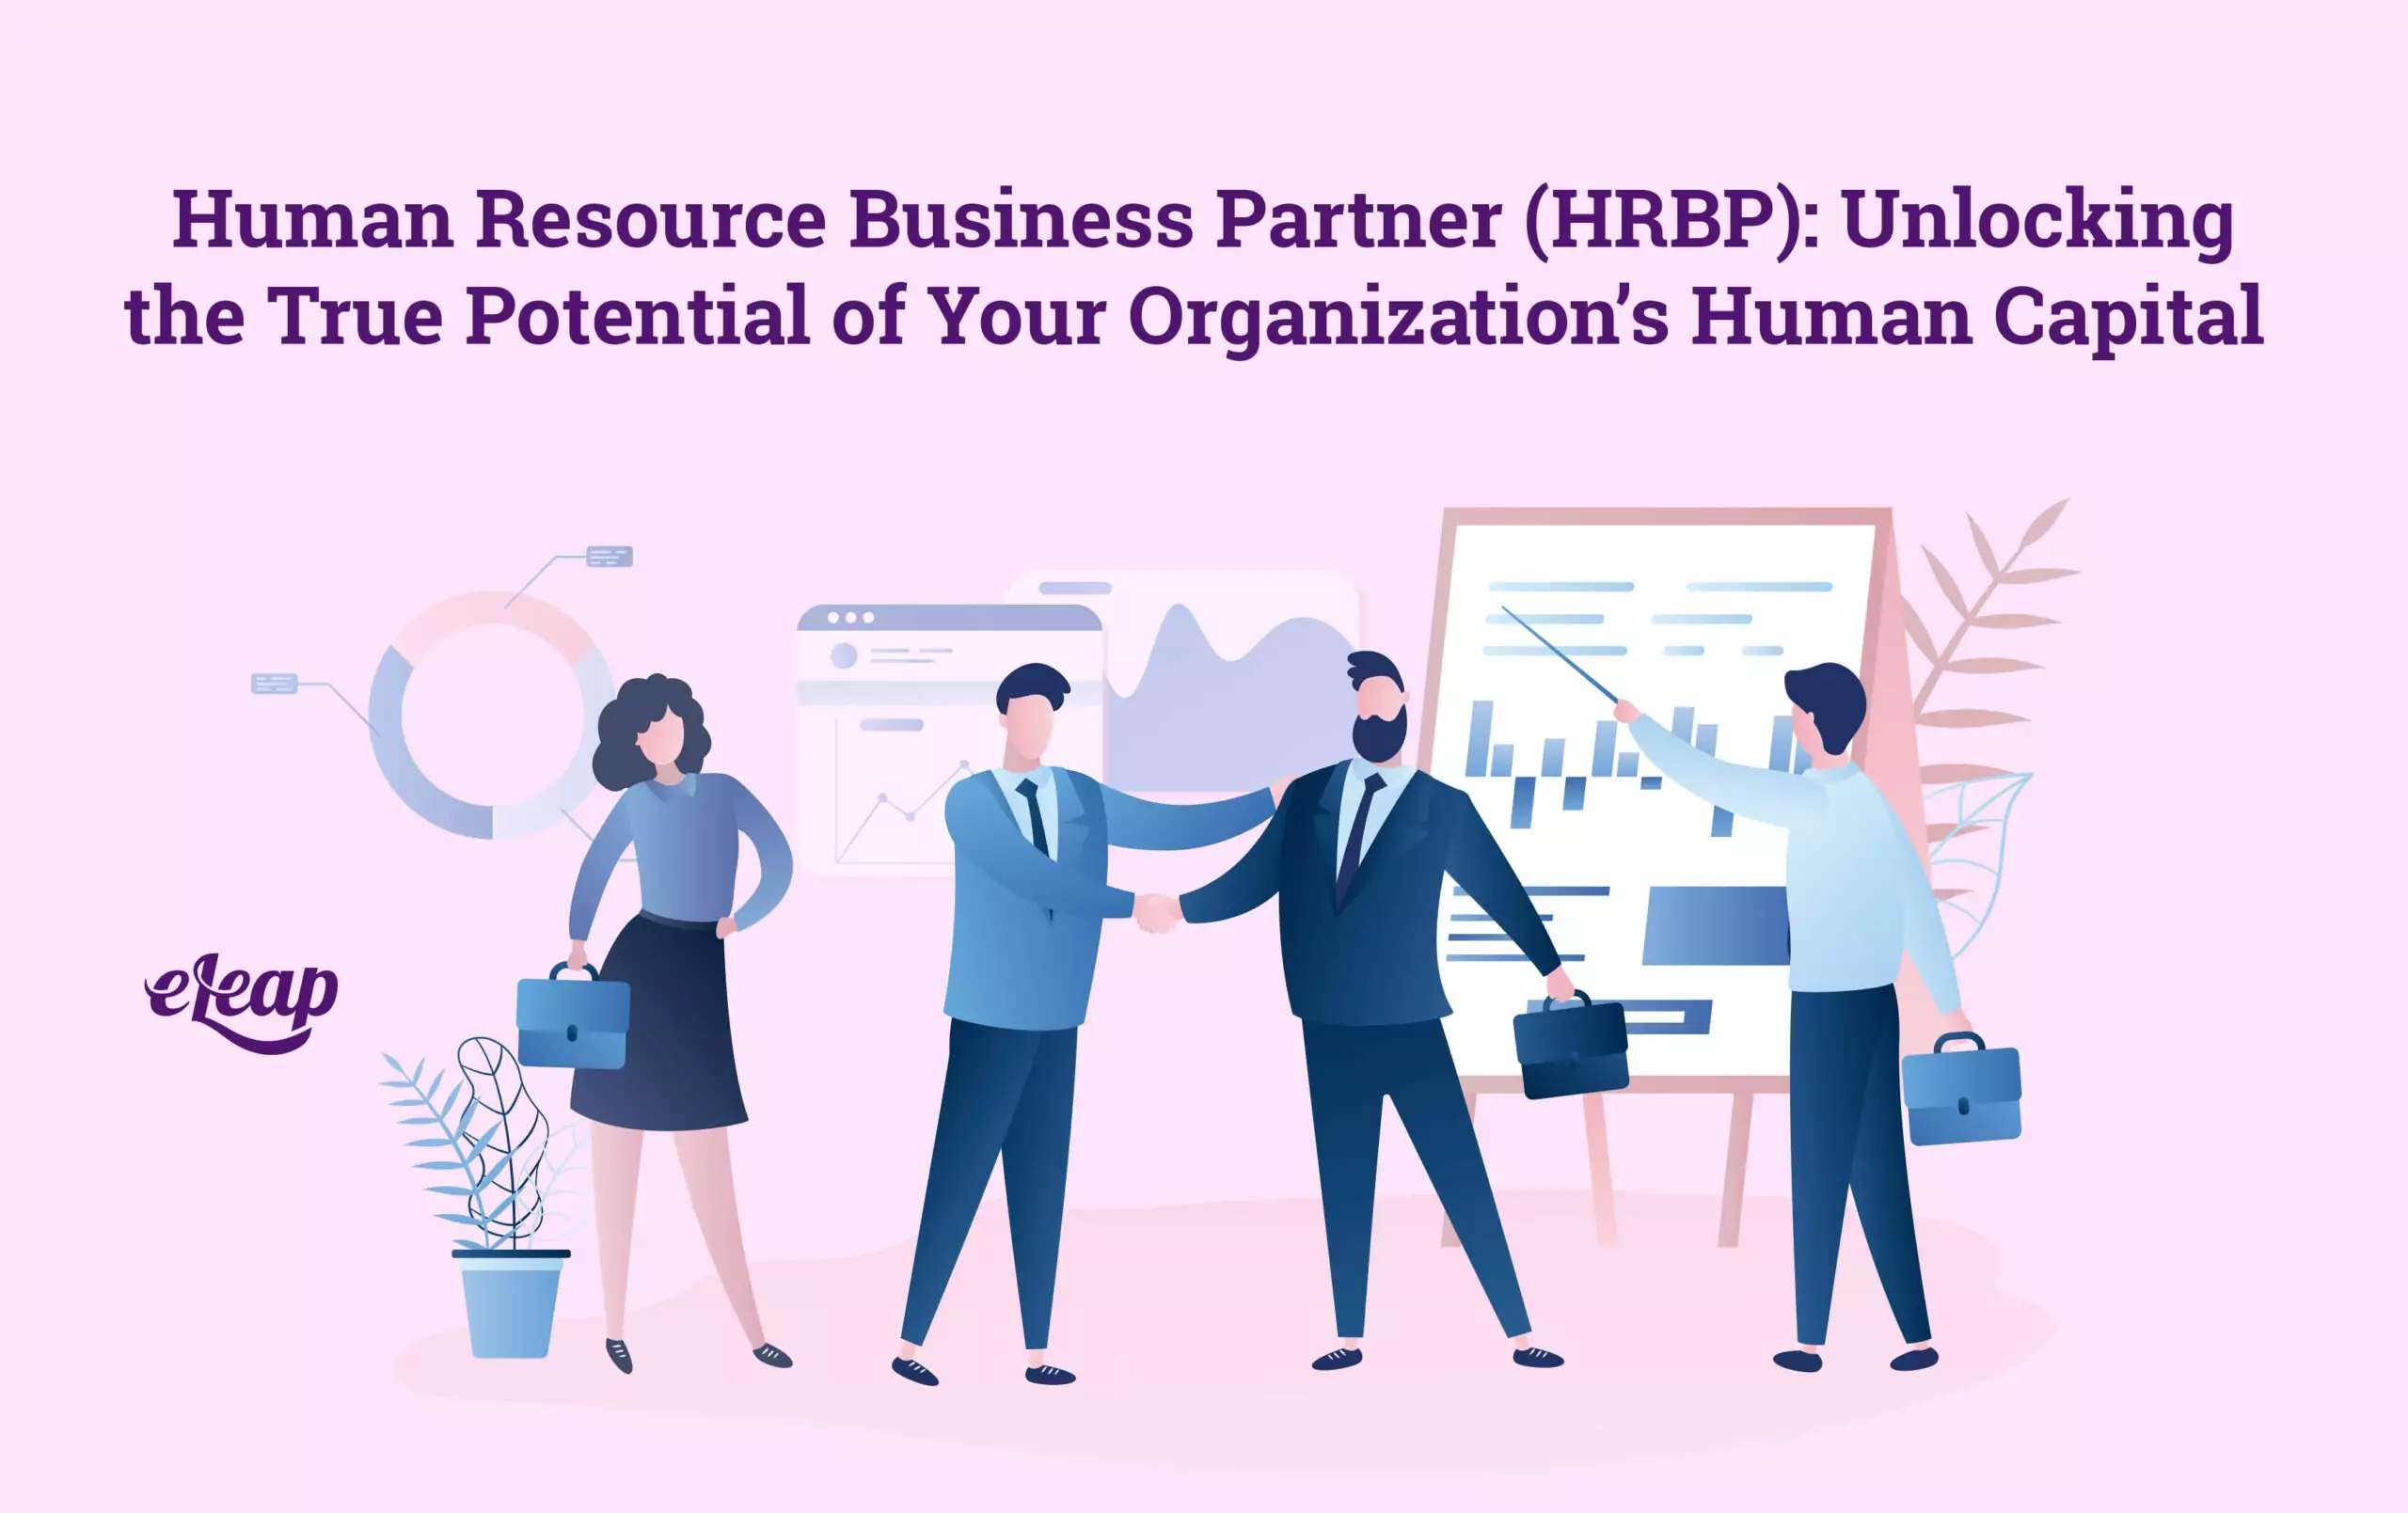 Human Resource Business Partner (HRBP)